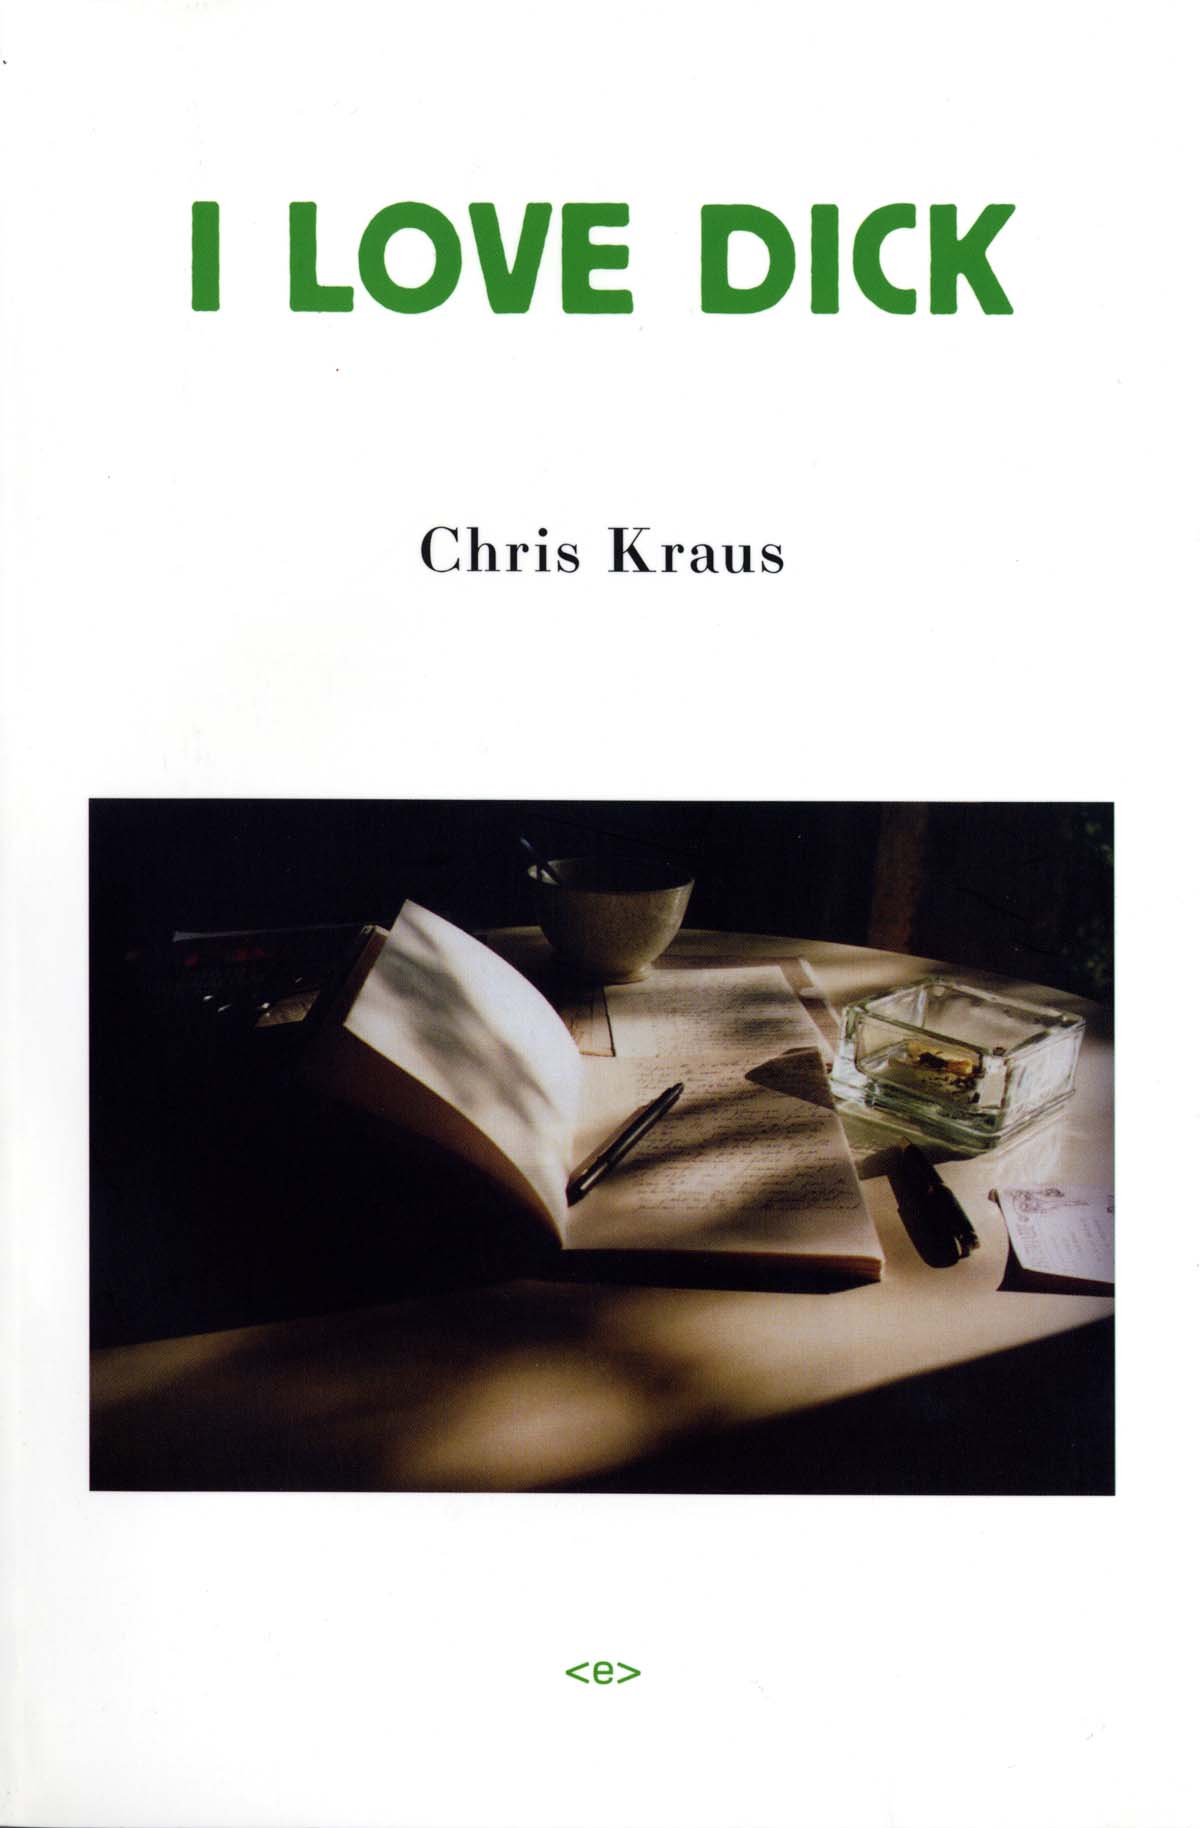 i love dick chris kraus book reading discussion club madrid